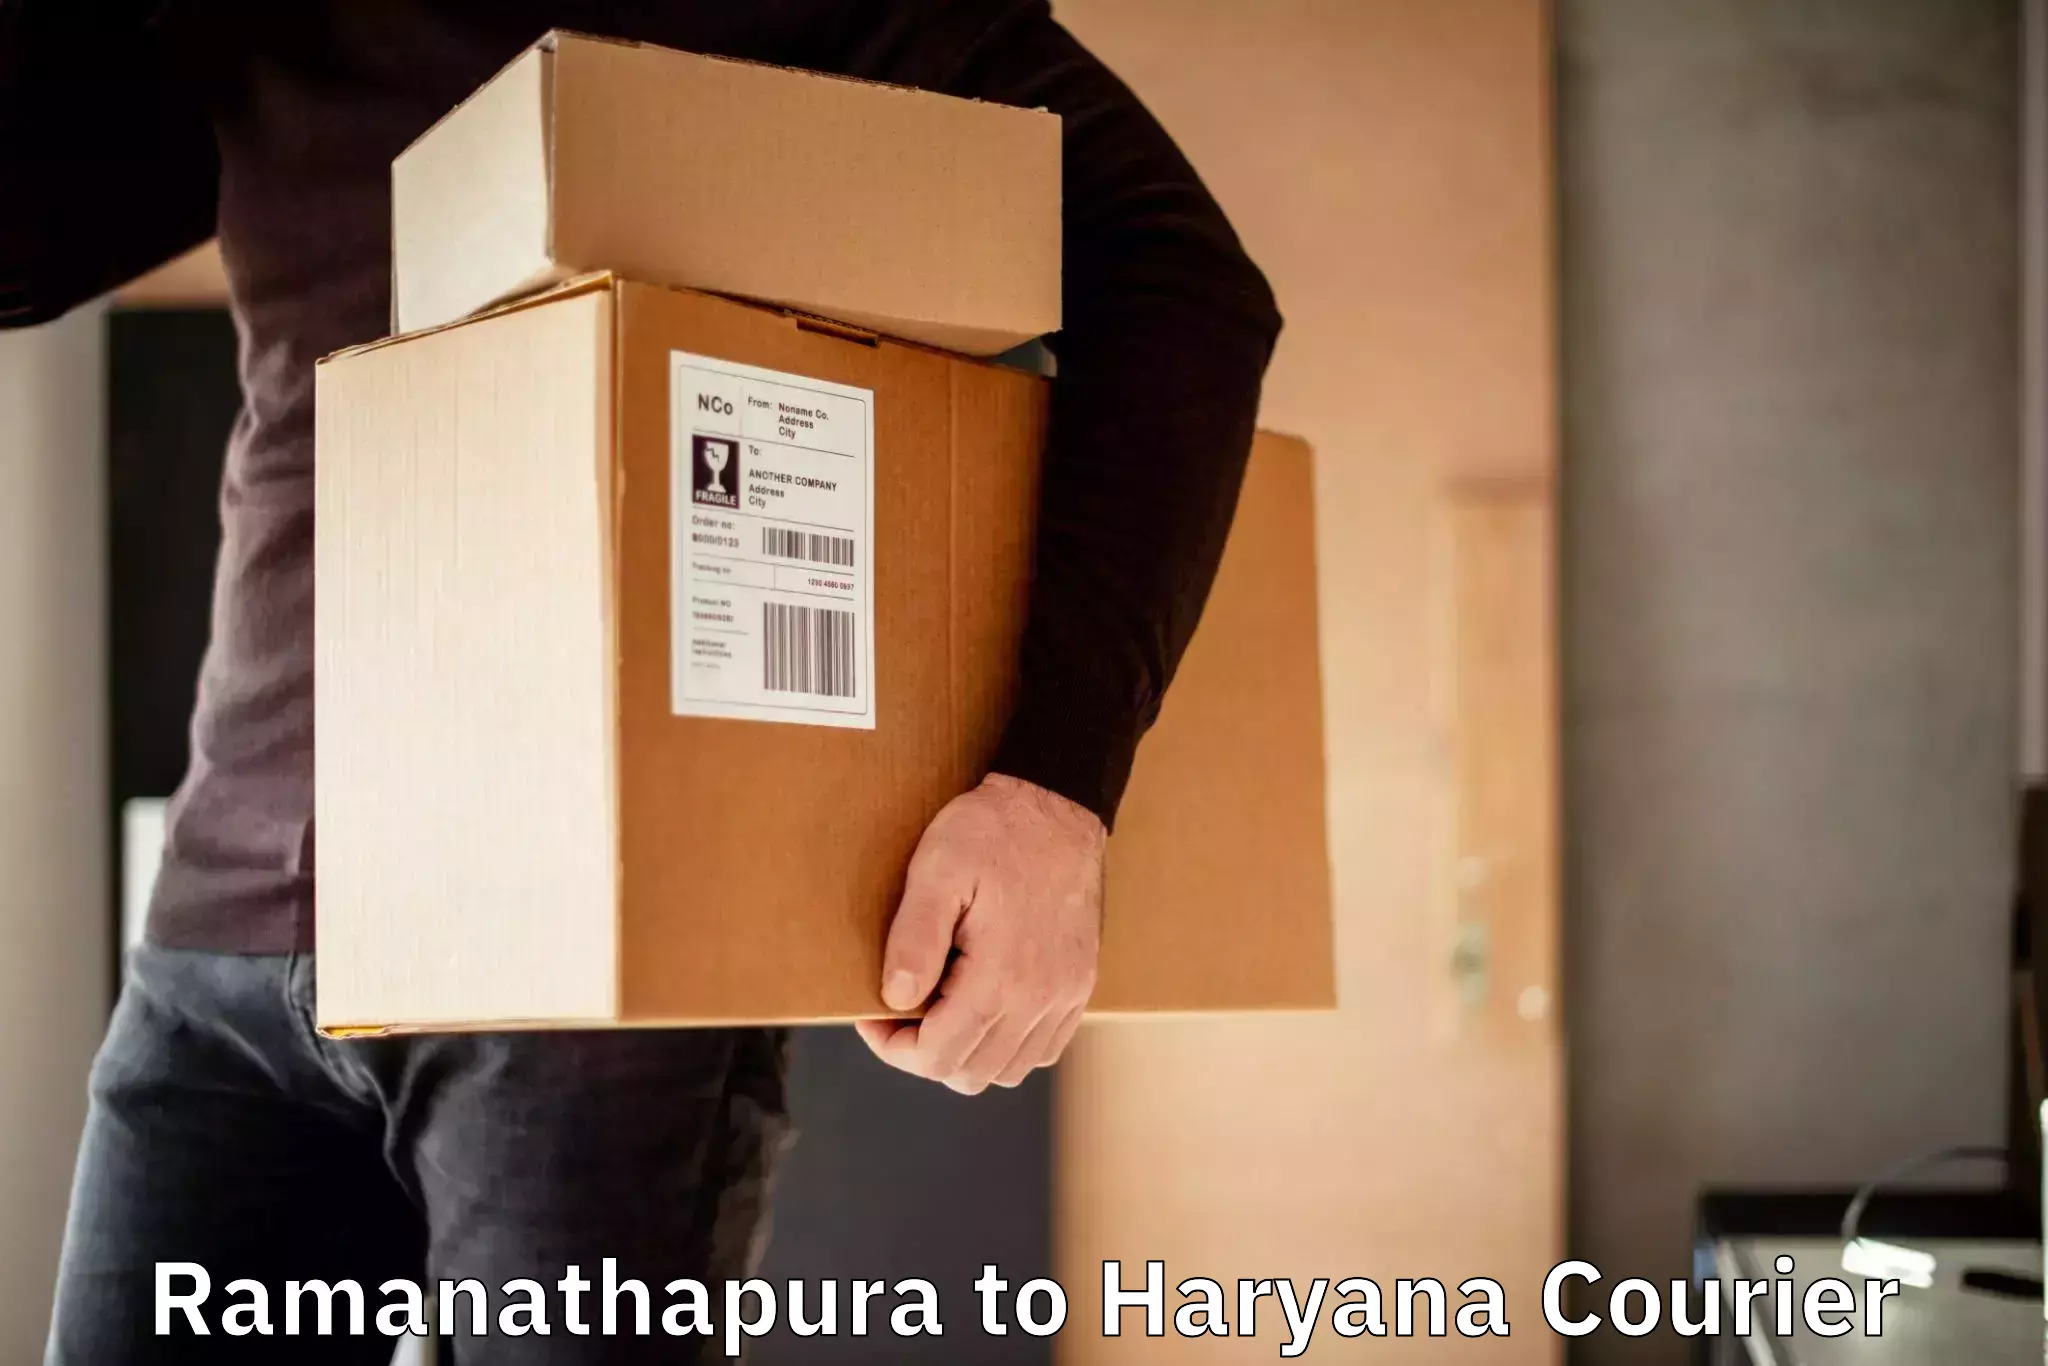 Courier service innovation Ramanathapura to Panipat